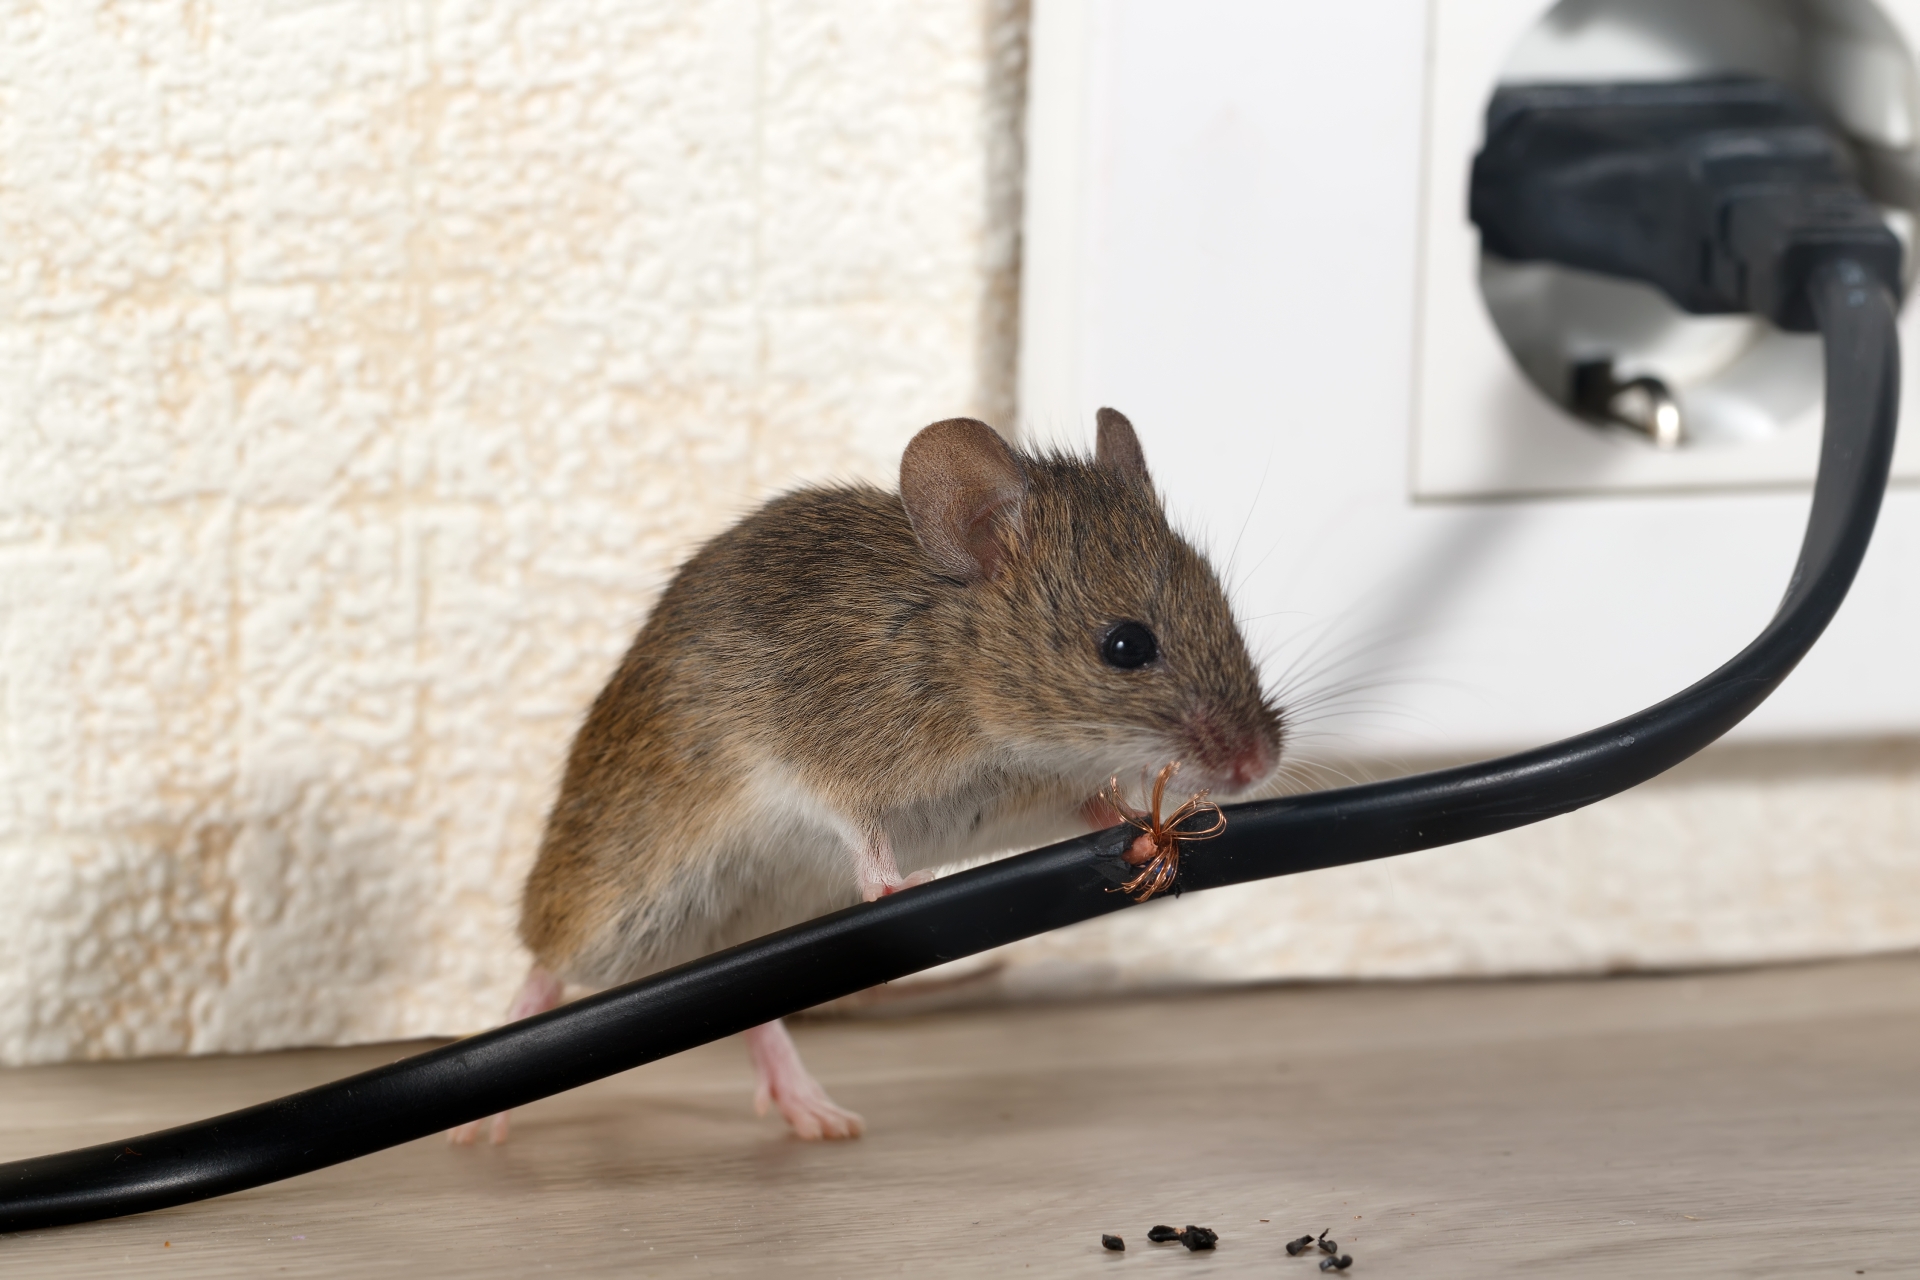 Mice Infestation, Pest Control in Islington, Barnsbury, Canonbury, N1. Call Now 020 8166 9746